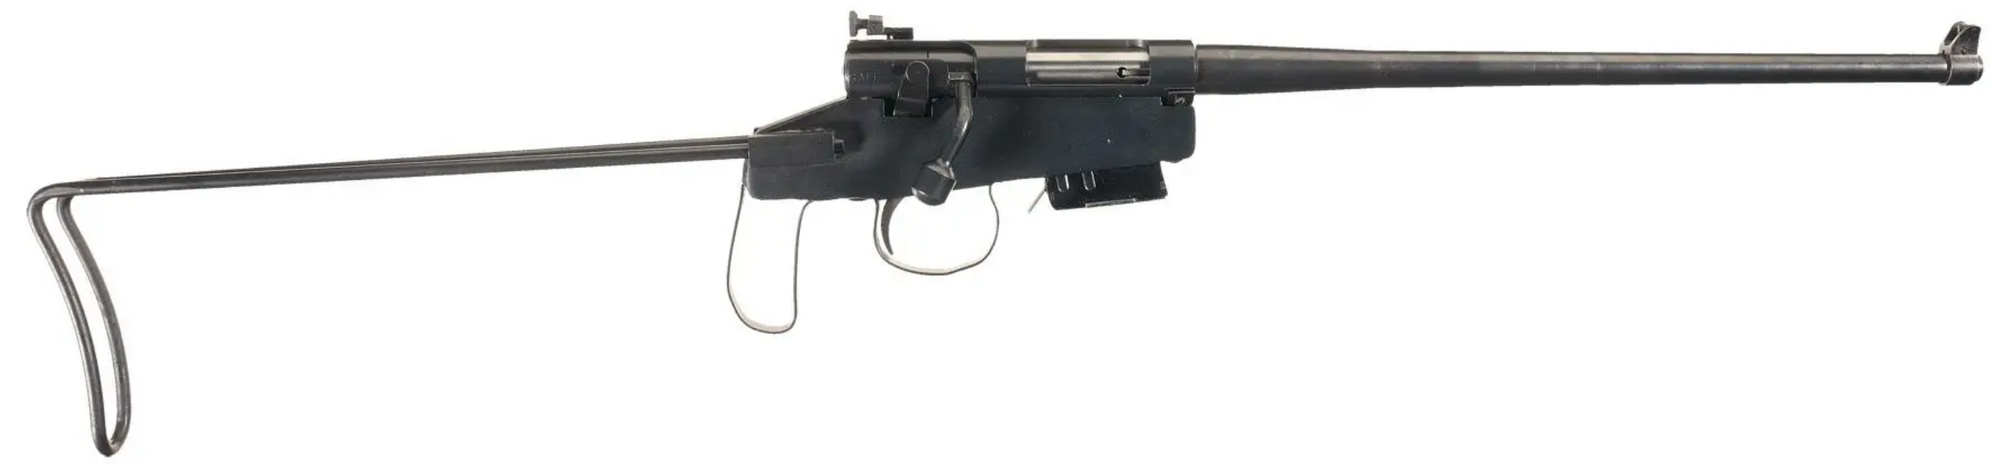 M4サバイバルライフル